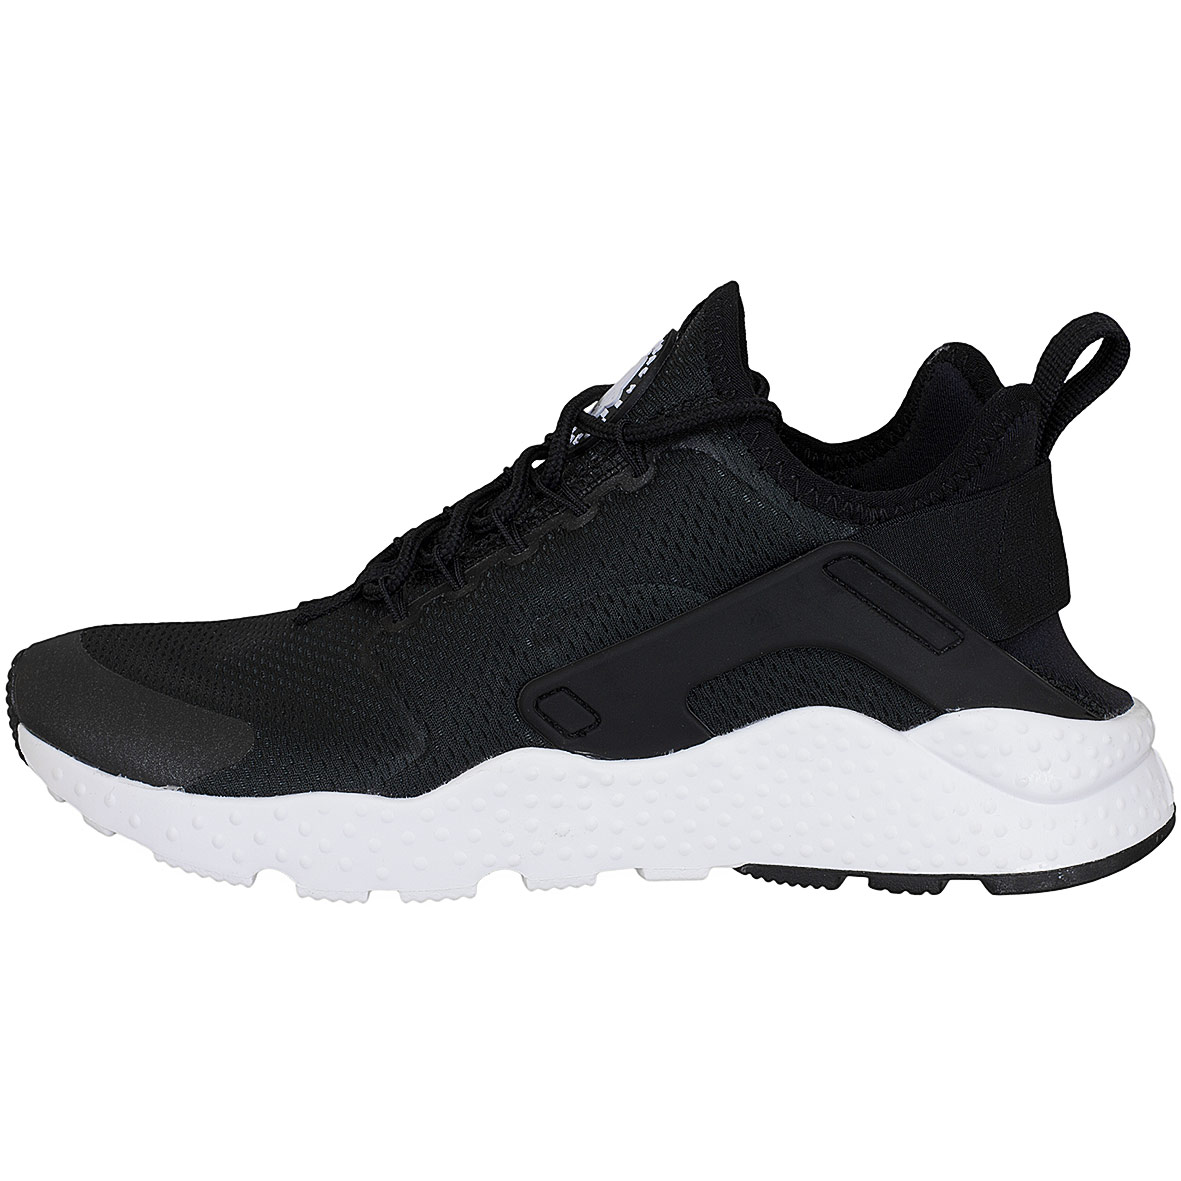 ☆ Nike Damen Sneaker Air Huarache Run Ultra schwarz/schwarz - hier  bestellen!